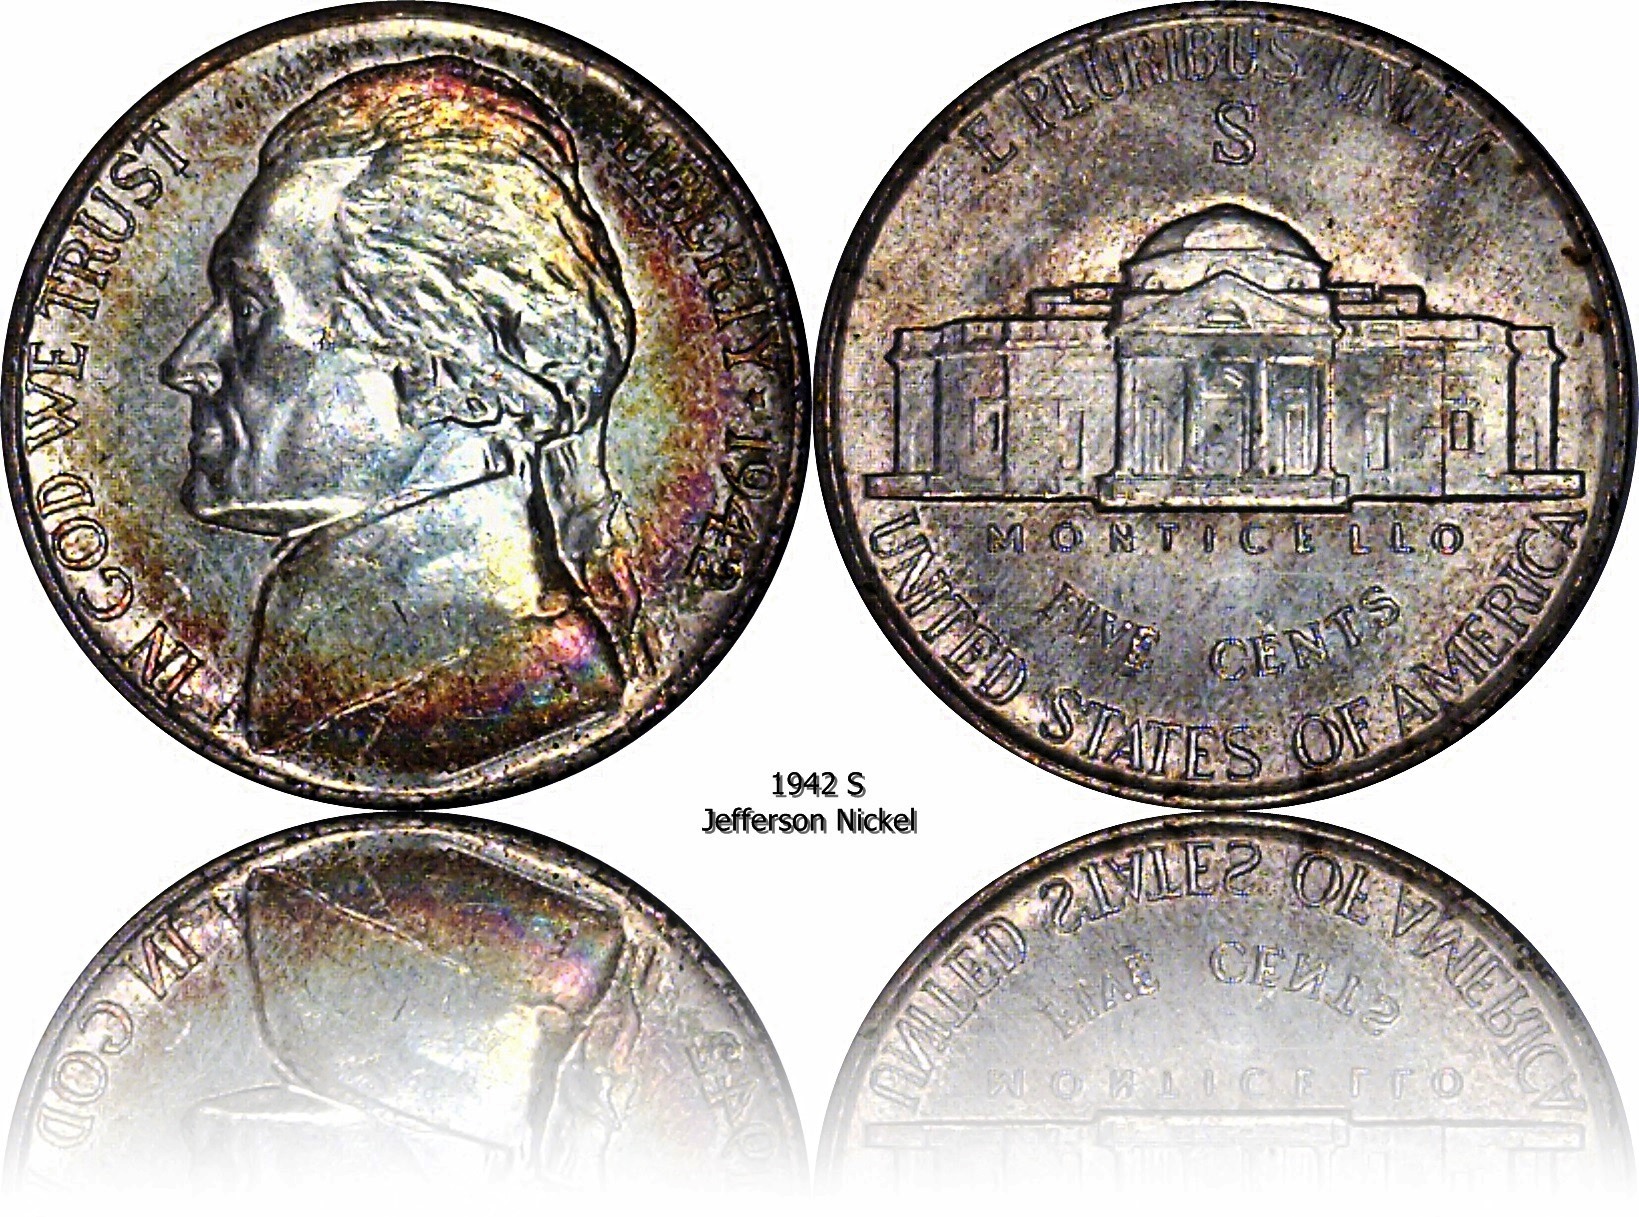 1942 S Raw Jefferson Nickel.jpg